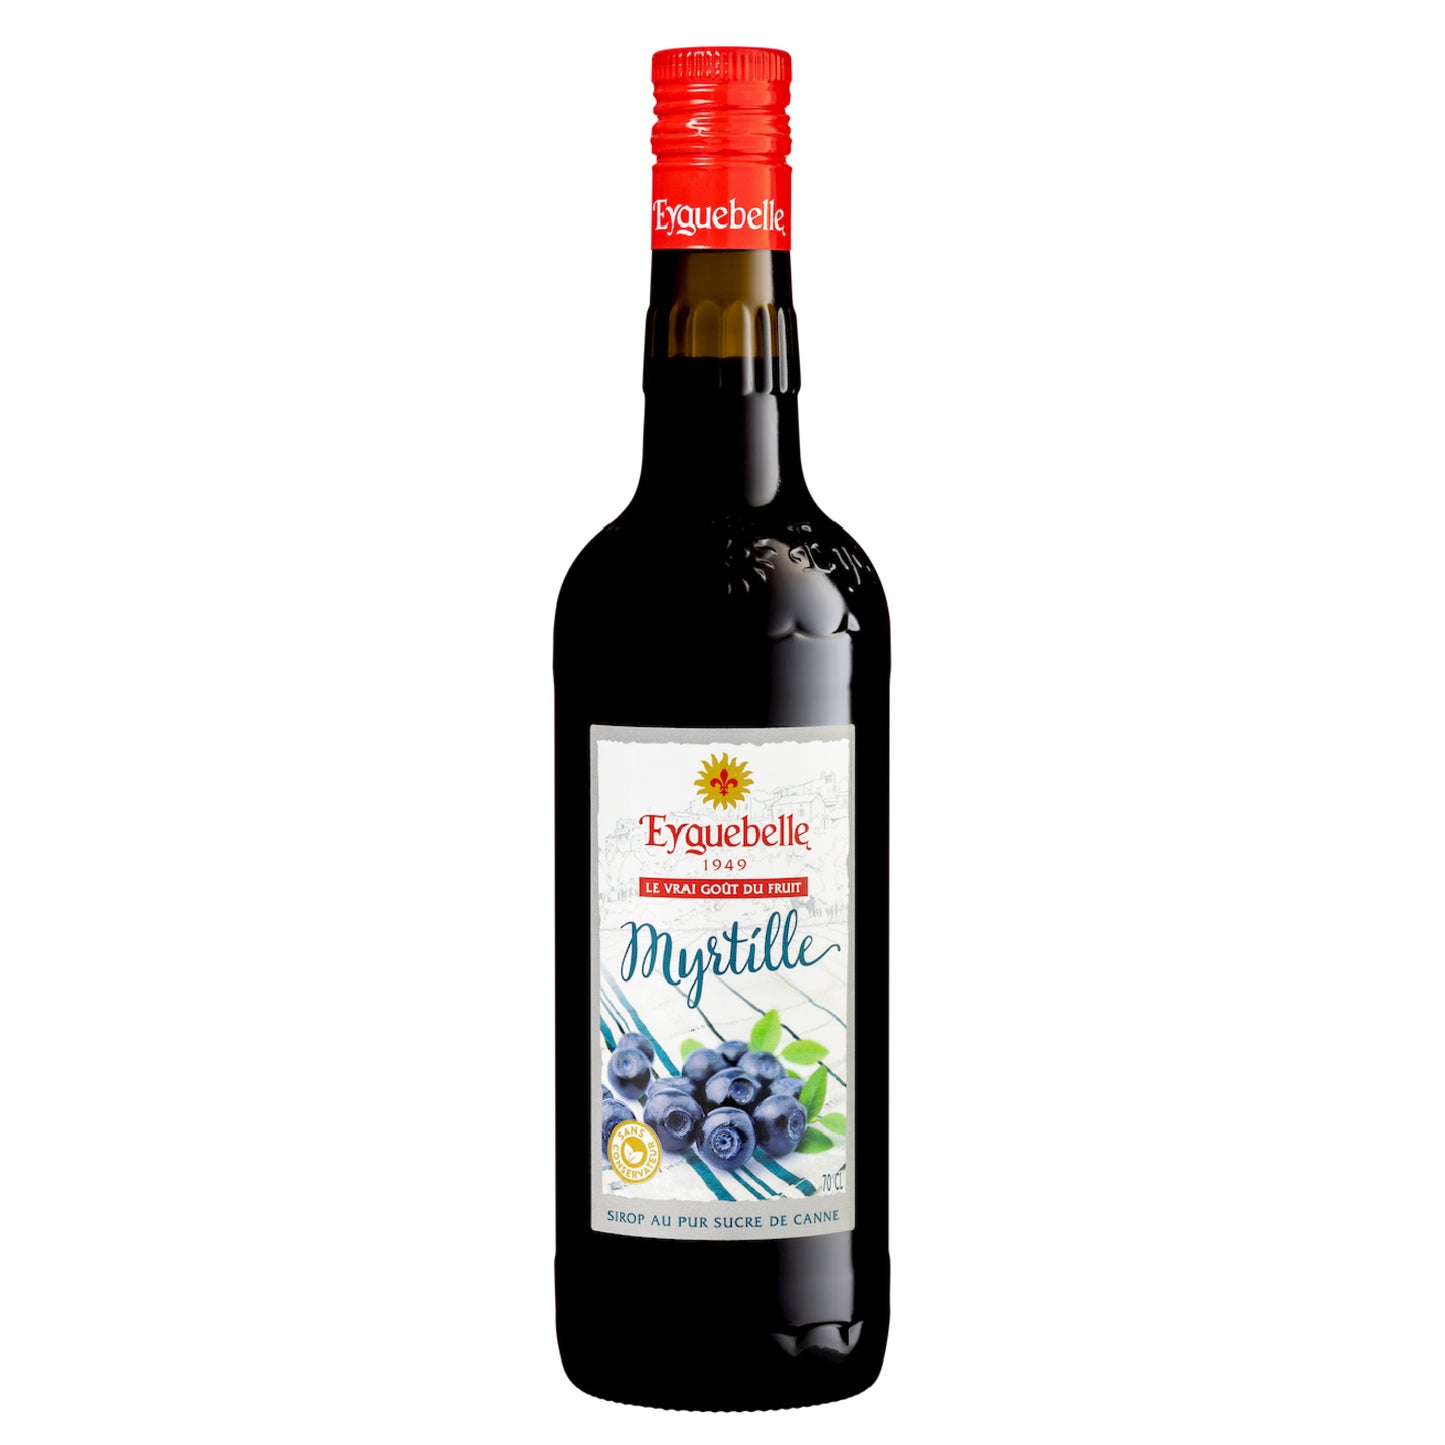 Sirop Artisan Myrtille, Artisan blueberry syrup, monin, Eyguebelle, Amatininkų mėlynių sirupas